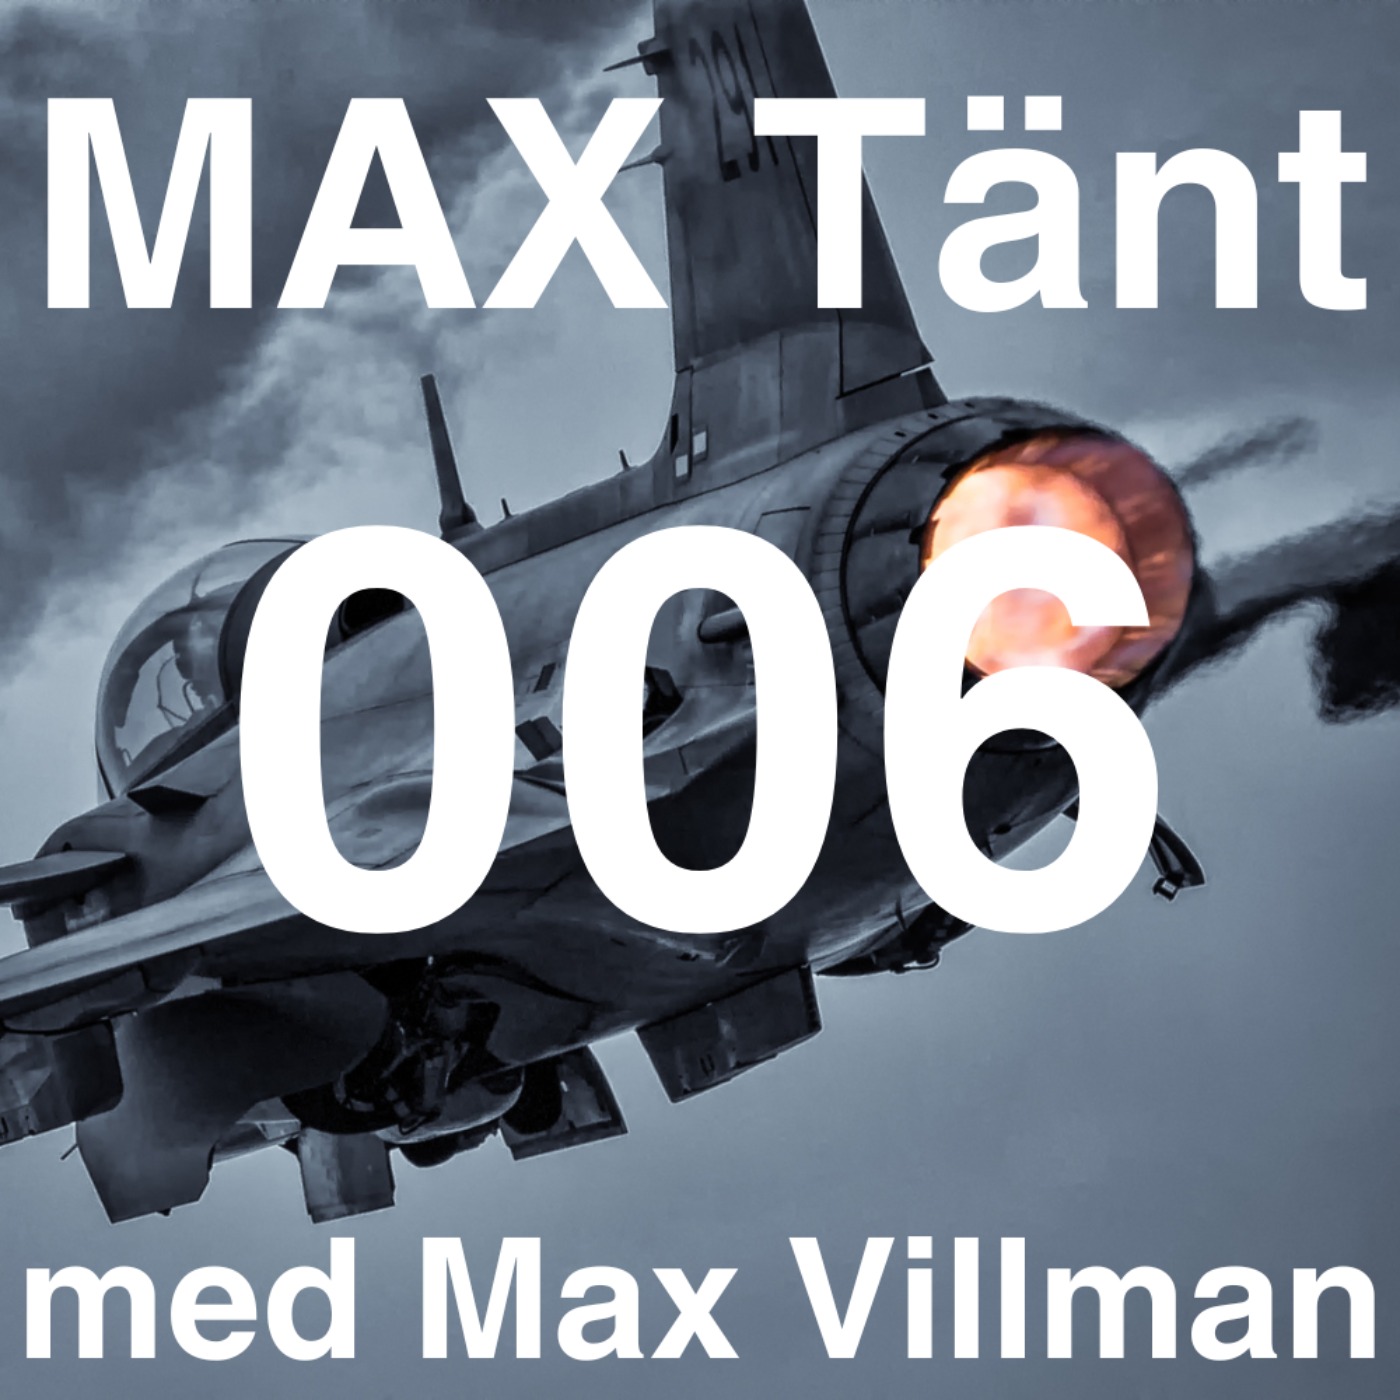 Max Tänt 006 - Möt rebelledaren som leder upproret! Arkitekturupprorets Michael Diamant